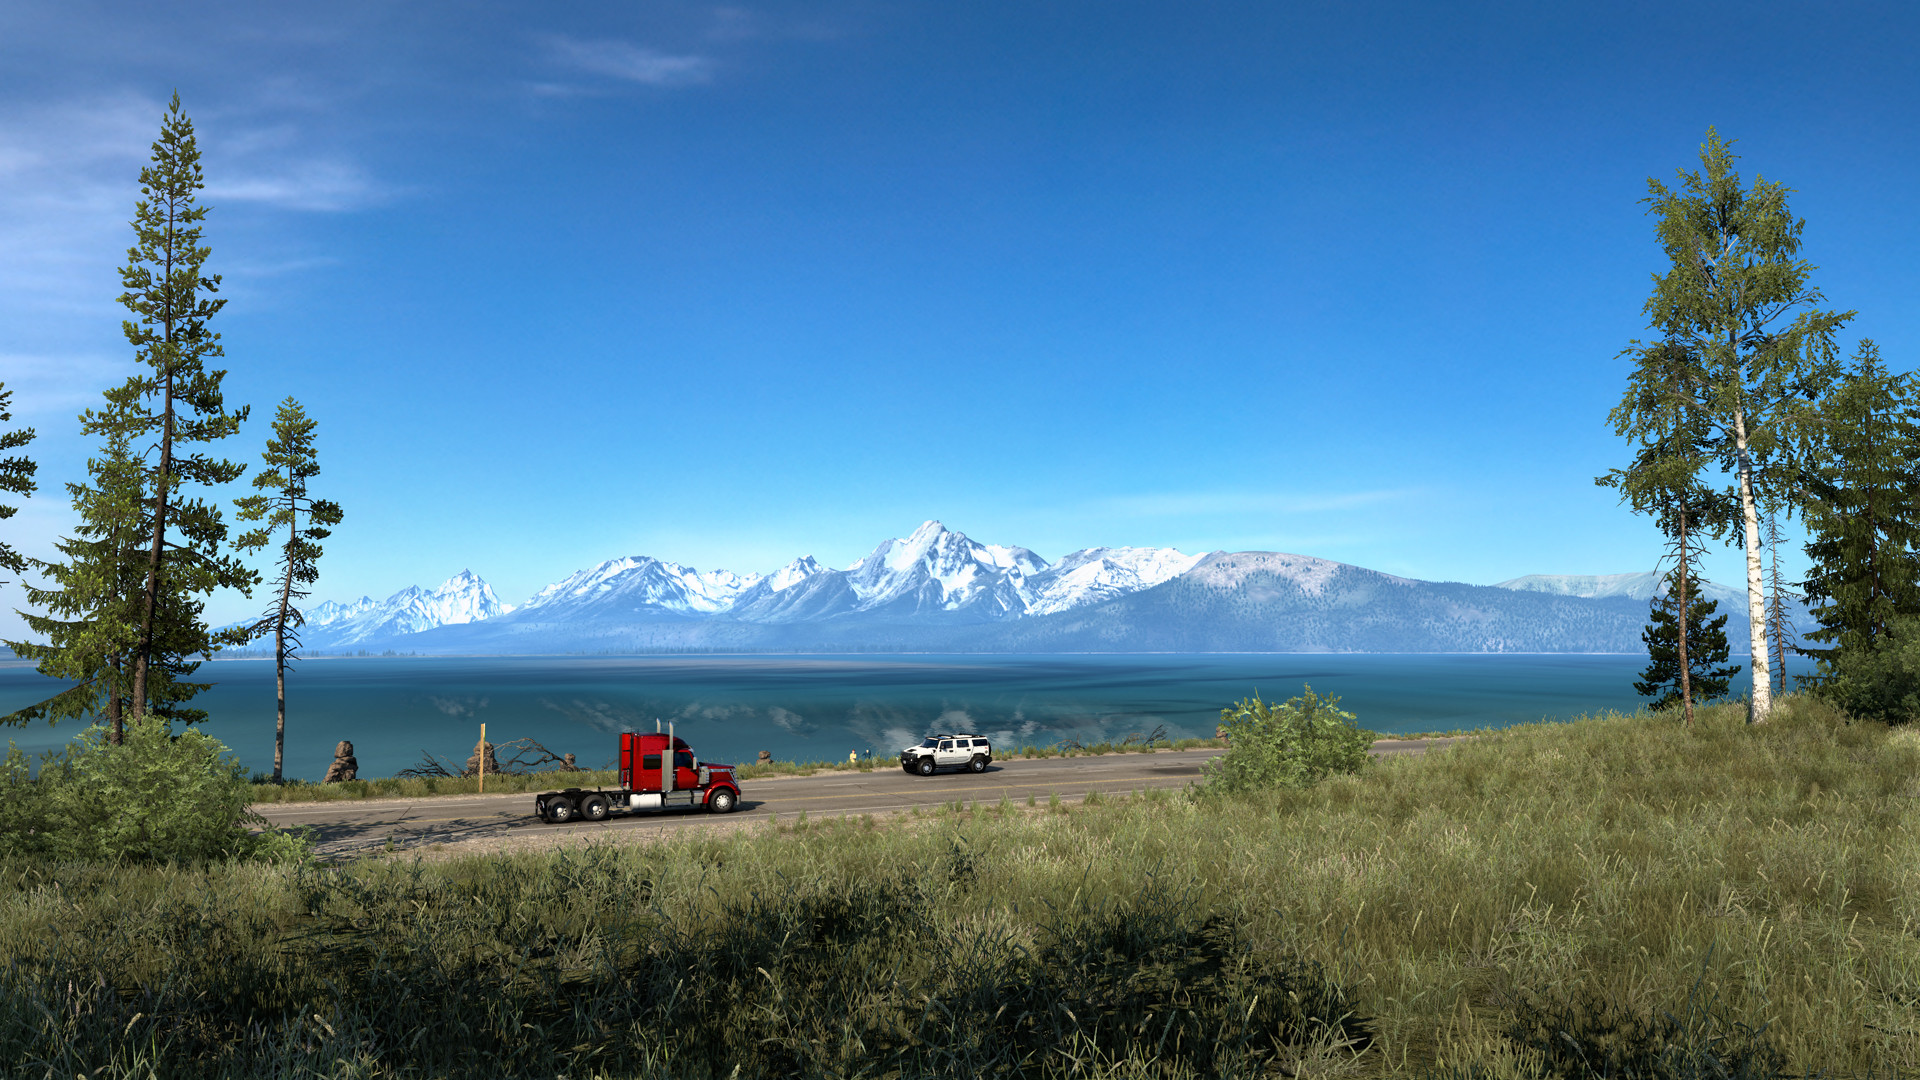 American Truck Simulator - Wyoming DLC Steam Altergift [USD 7.48]